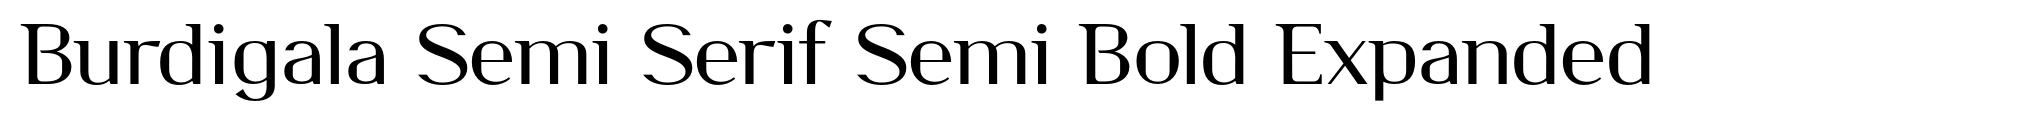 Burdigala Semi Serif Semi Bold Expanded image